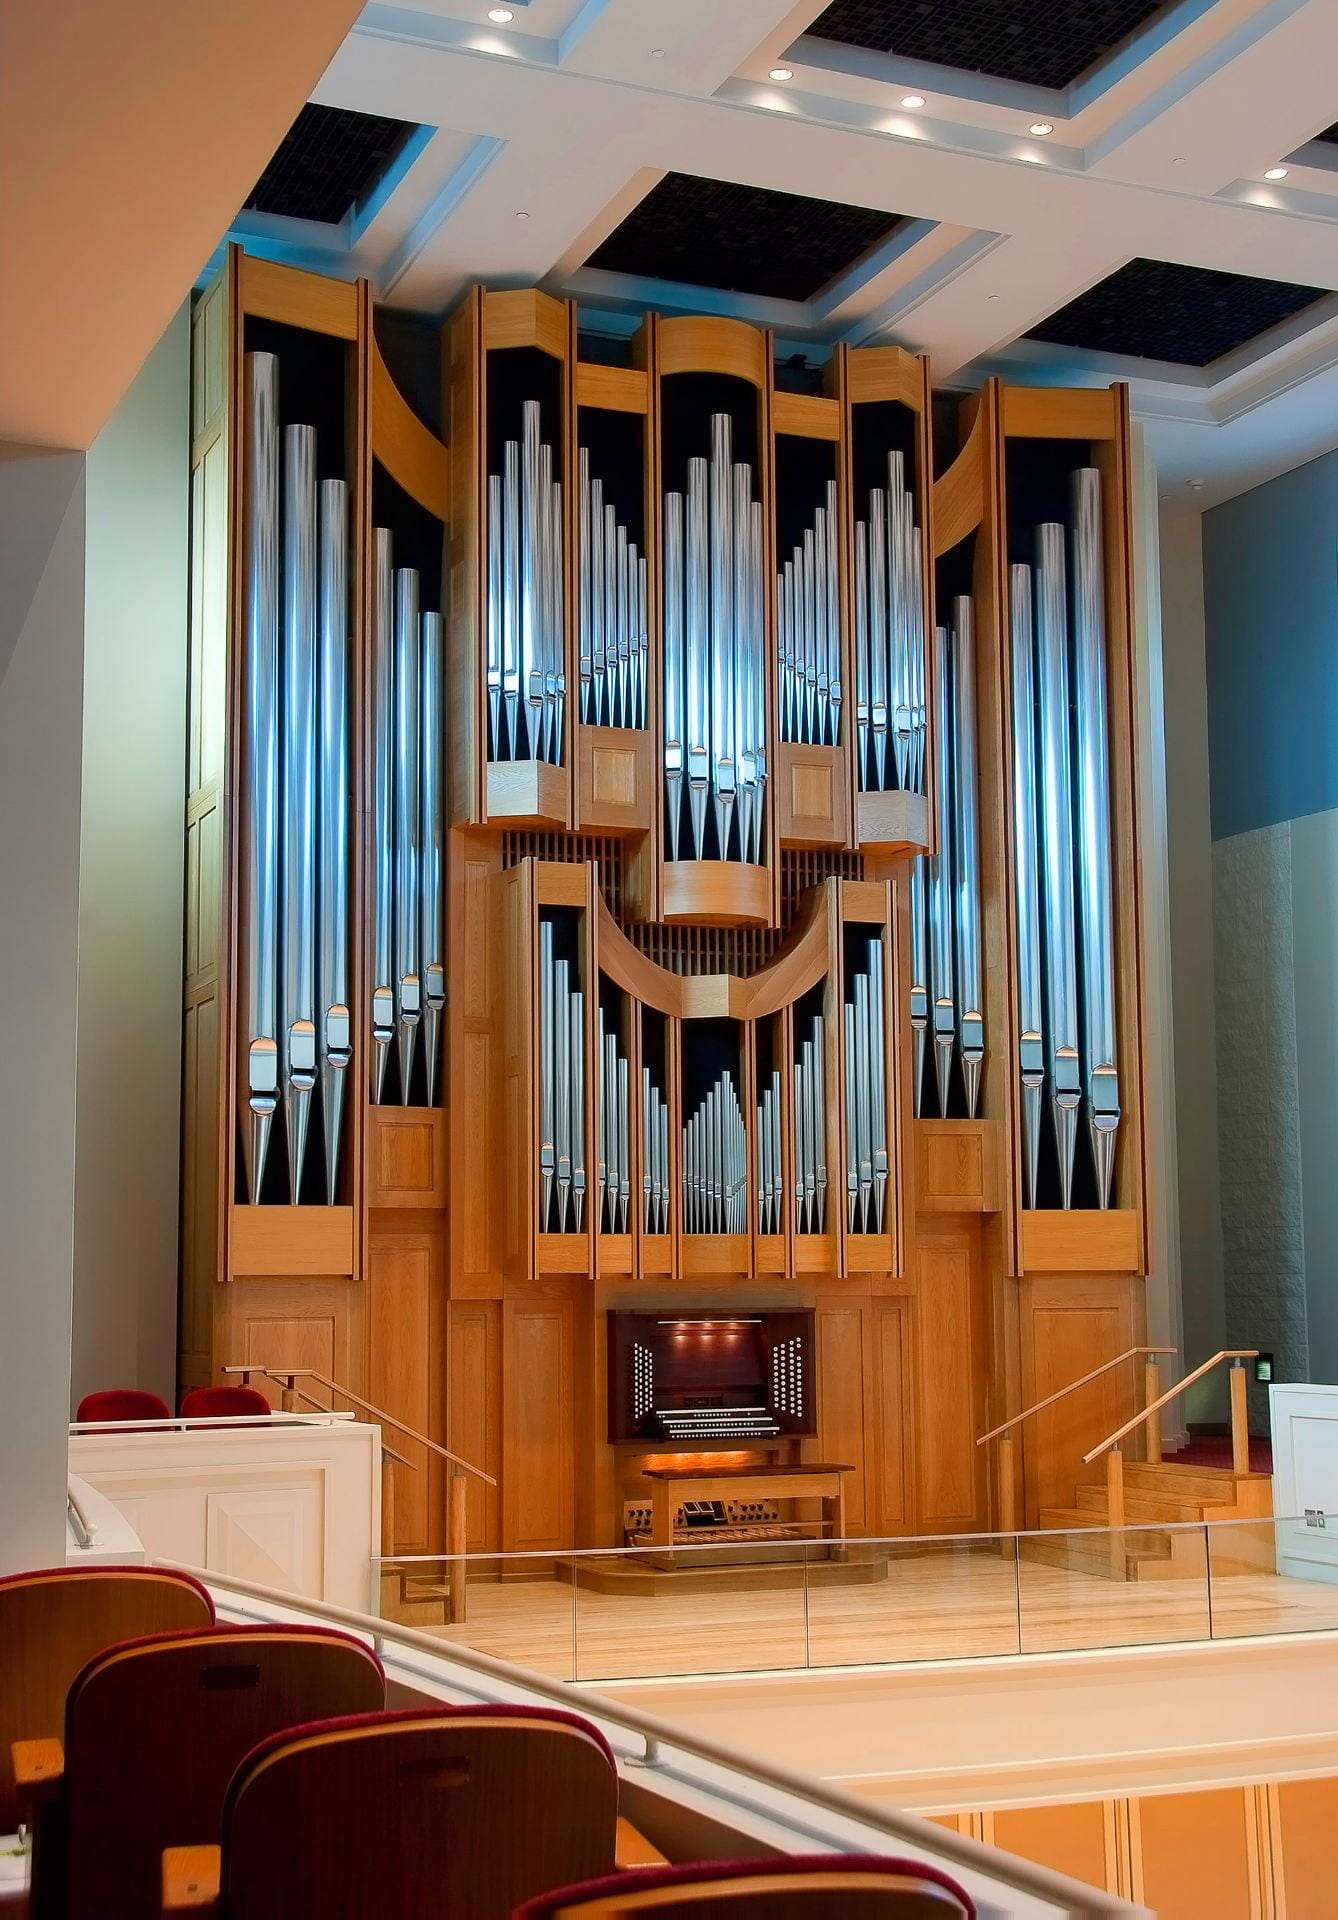 Organ in Auer Hall